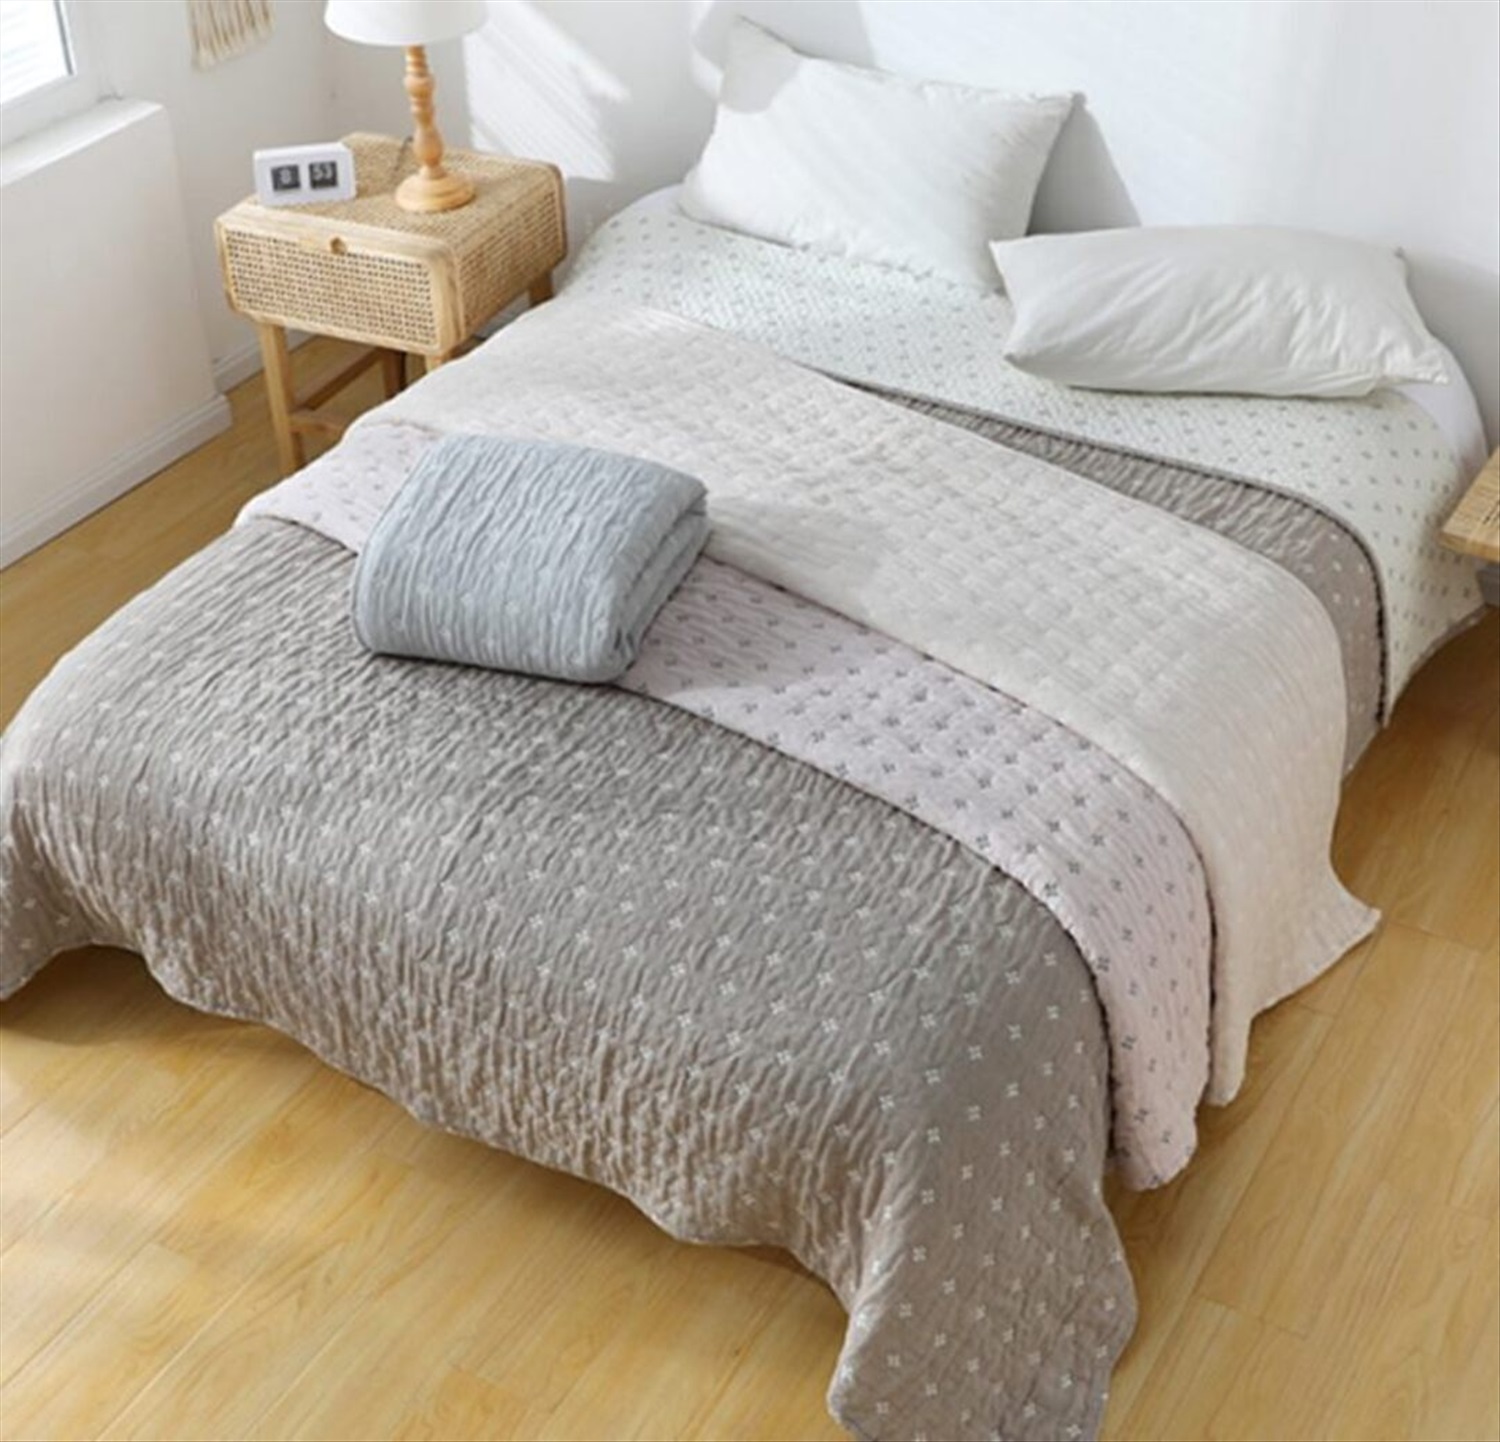 Одеяло на евро кровать